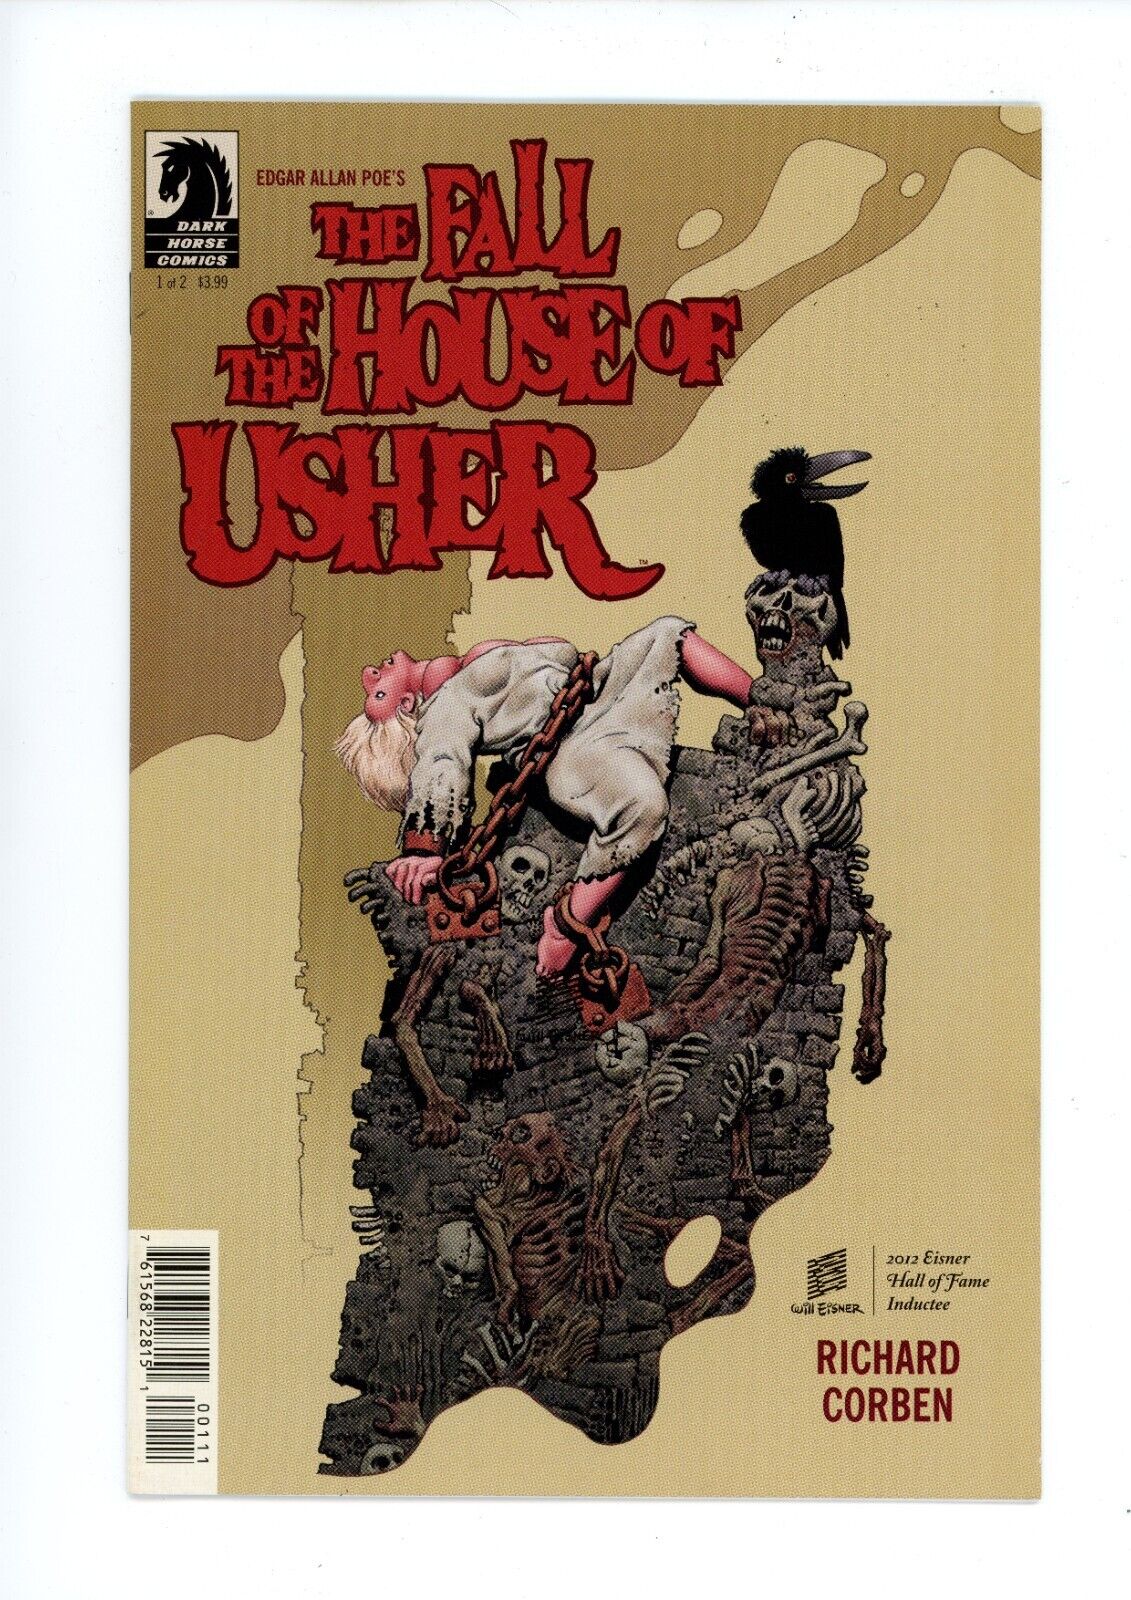 EDGAR ALLAN POE'S THE FALL OF THE HOUSE OF USHER #1 DARK HORSE COMICS (2013)